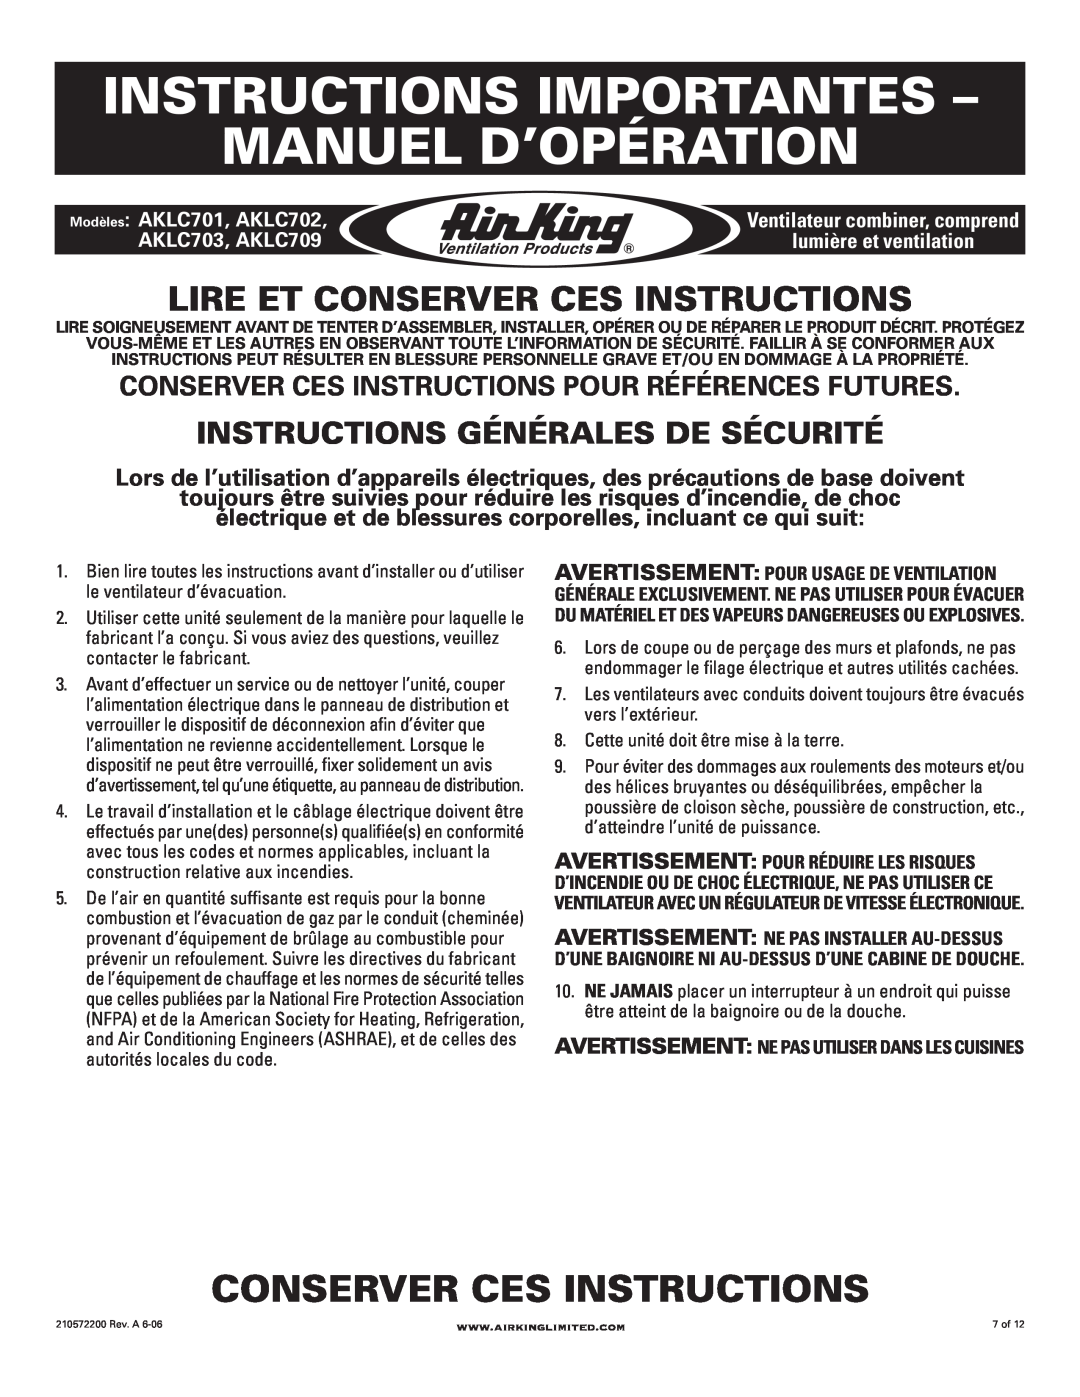 Air King AKLC709, AKLC701, AKLC703, AKLC702 manual Instructions Importantes - Manuel D’Opération, Conserver Ces Instructions 